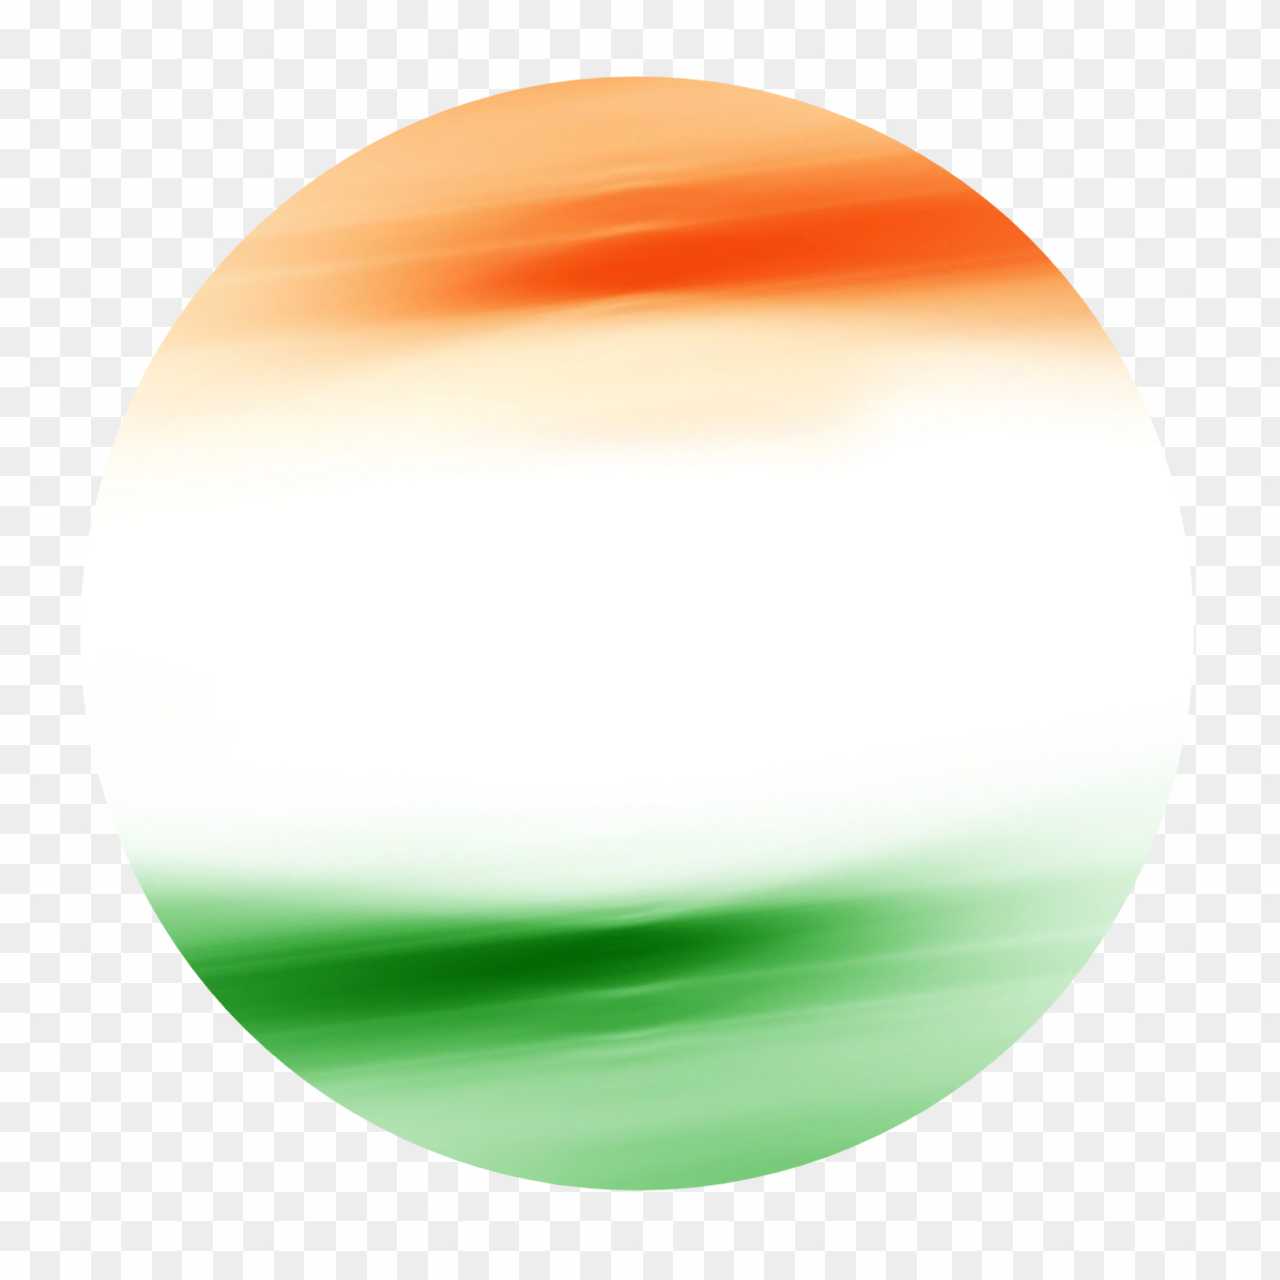 Indian flag background png images download